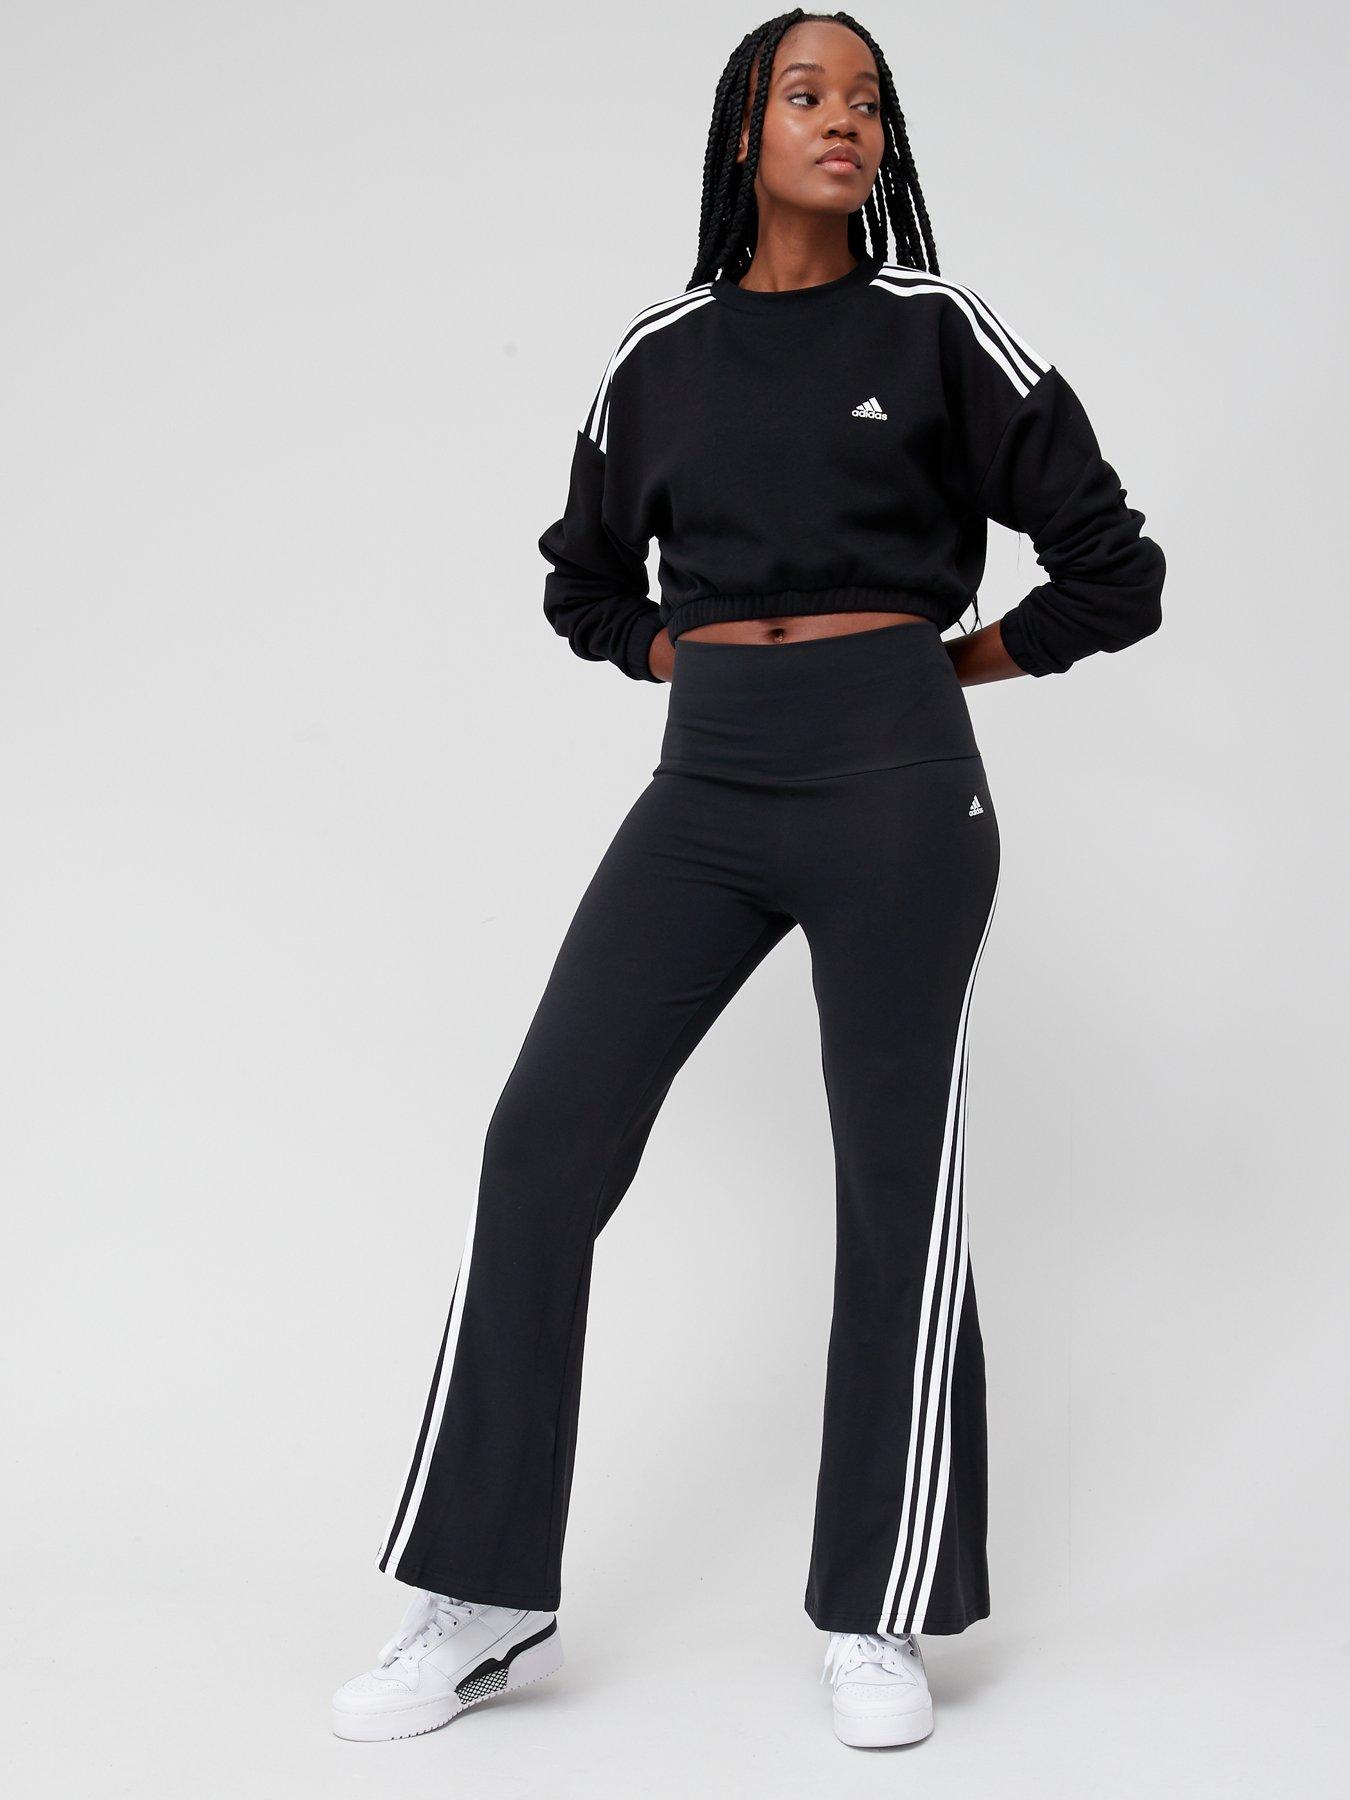 beklimmen naaimachine jungle adidas Future Icons 3 Stripes Flare Pants - Black | Very Ireland